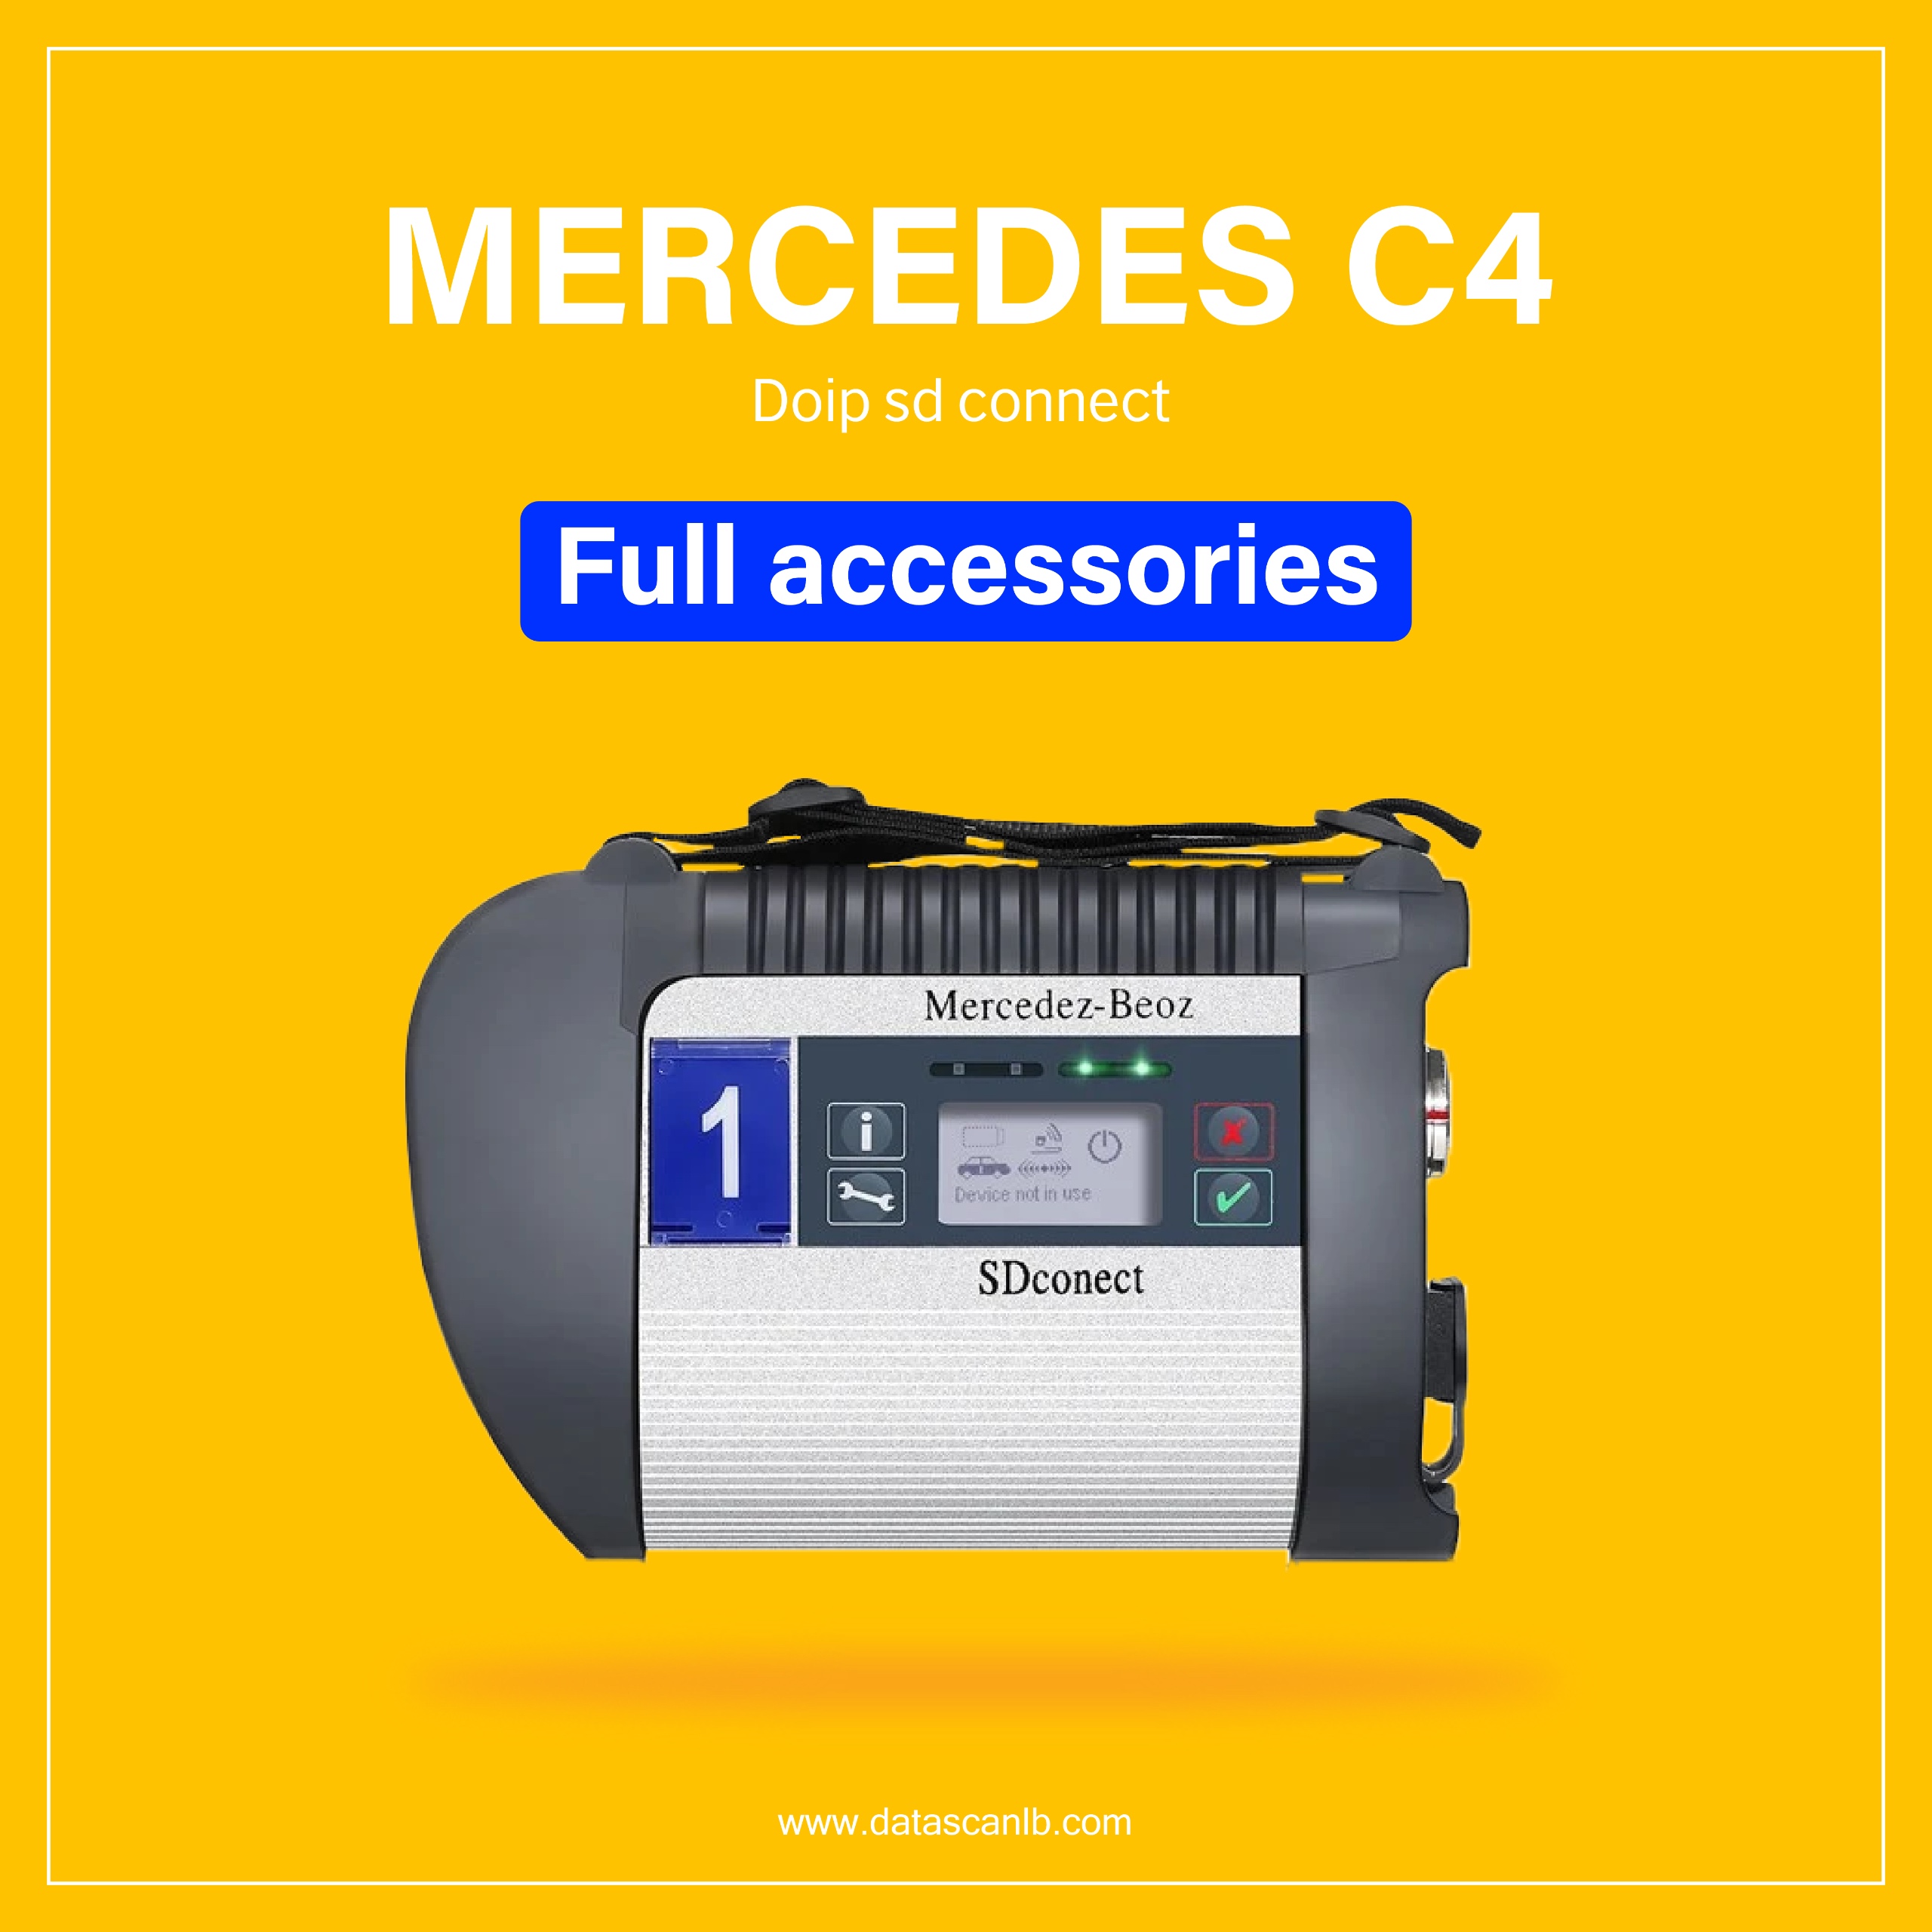 Mercedes Benz Sdconnect C4 DoIP